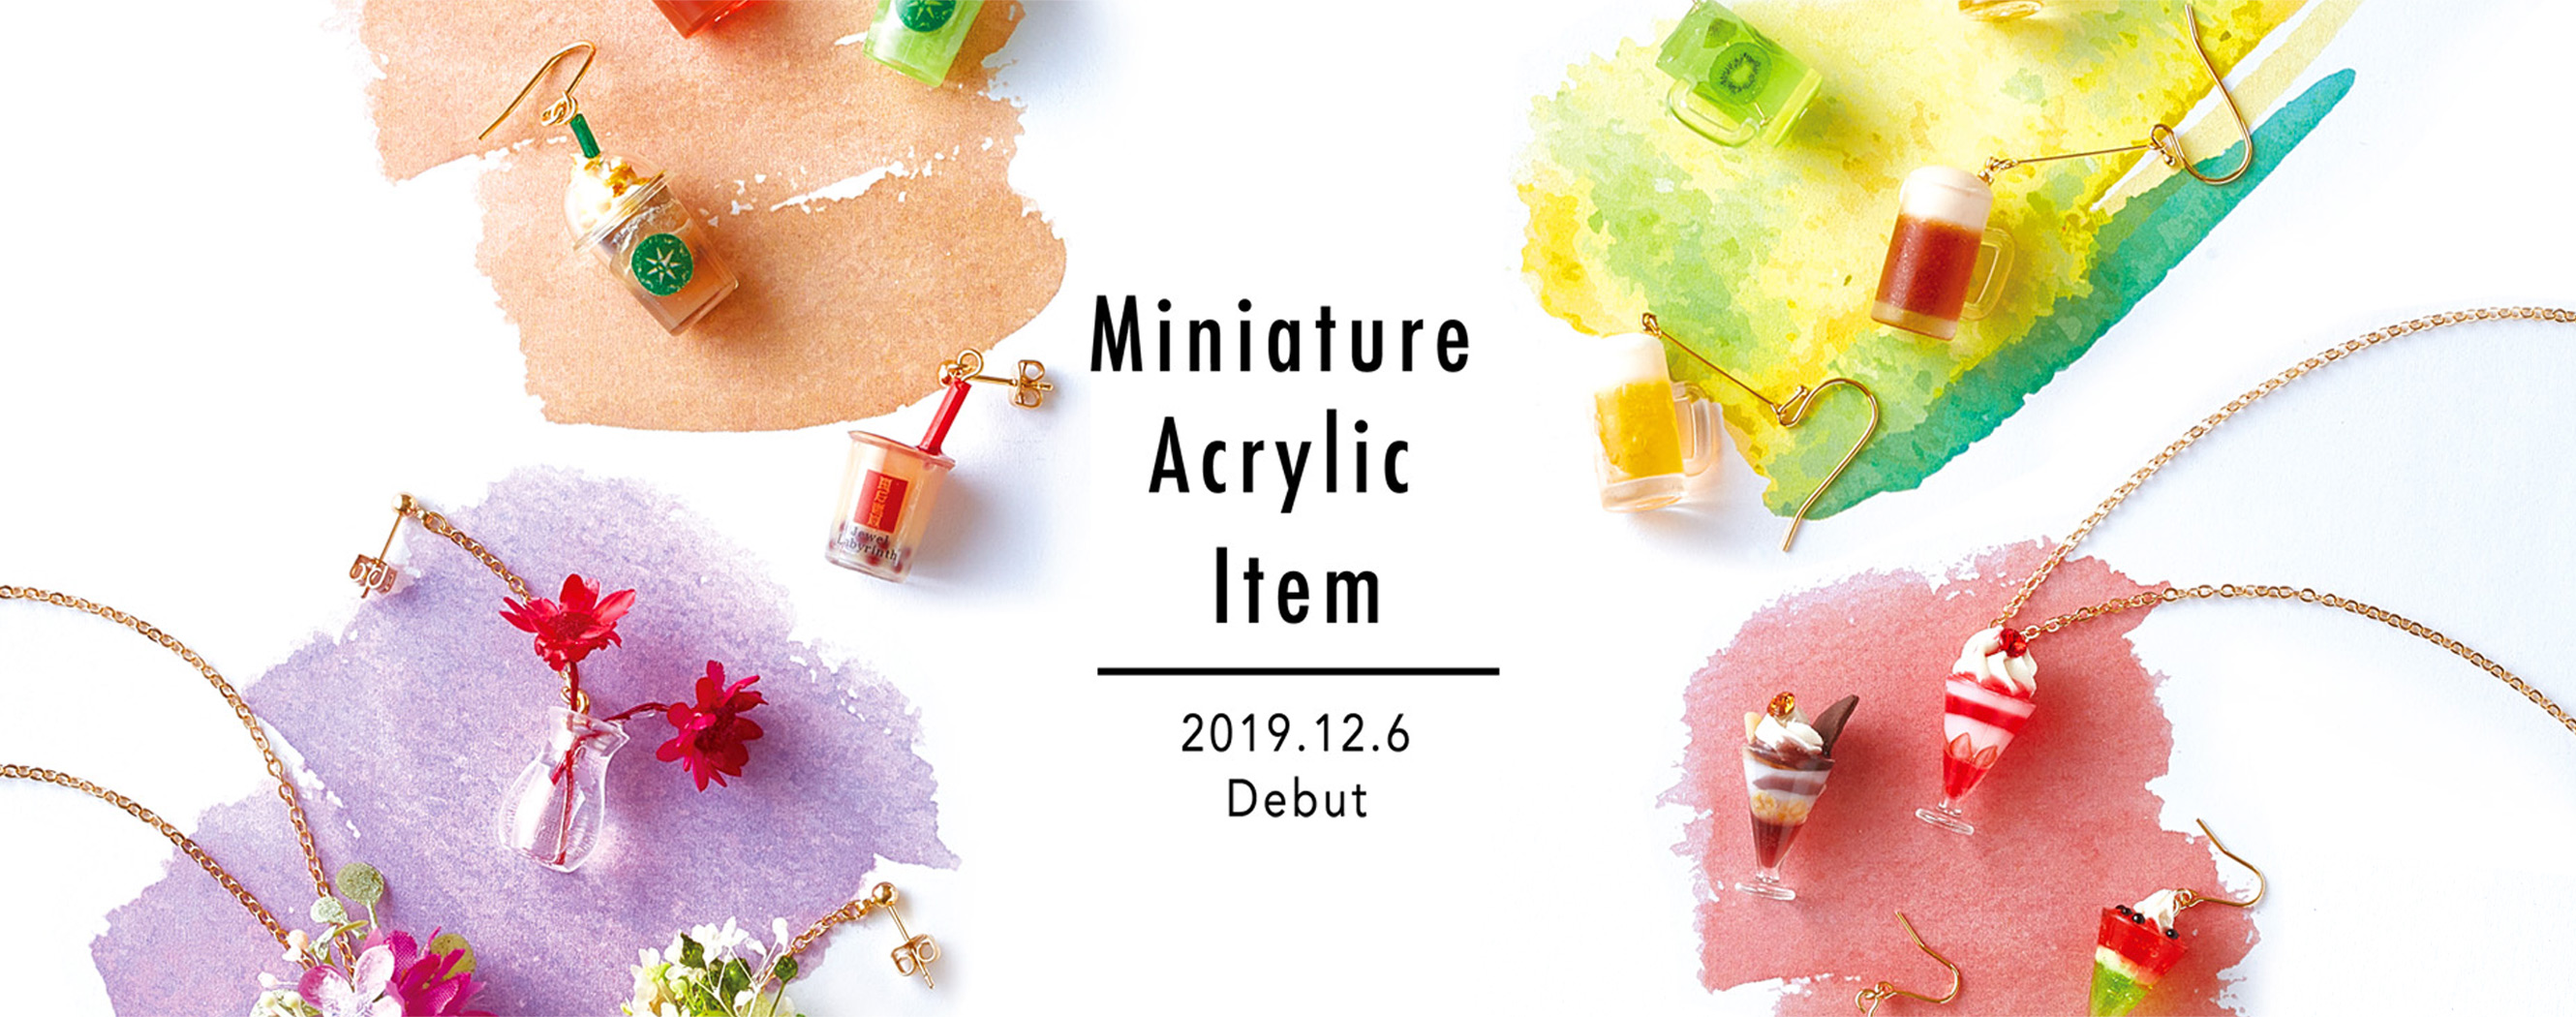 Miniature Acrylic Item 2019.12.6 Debut